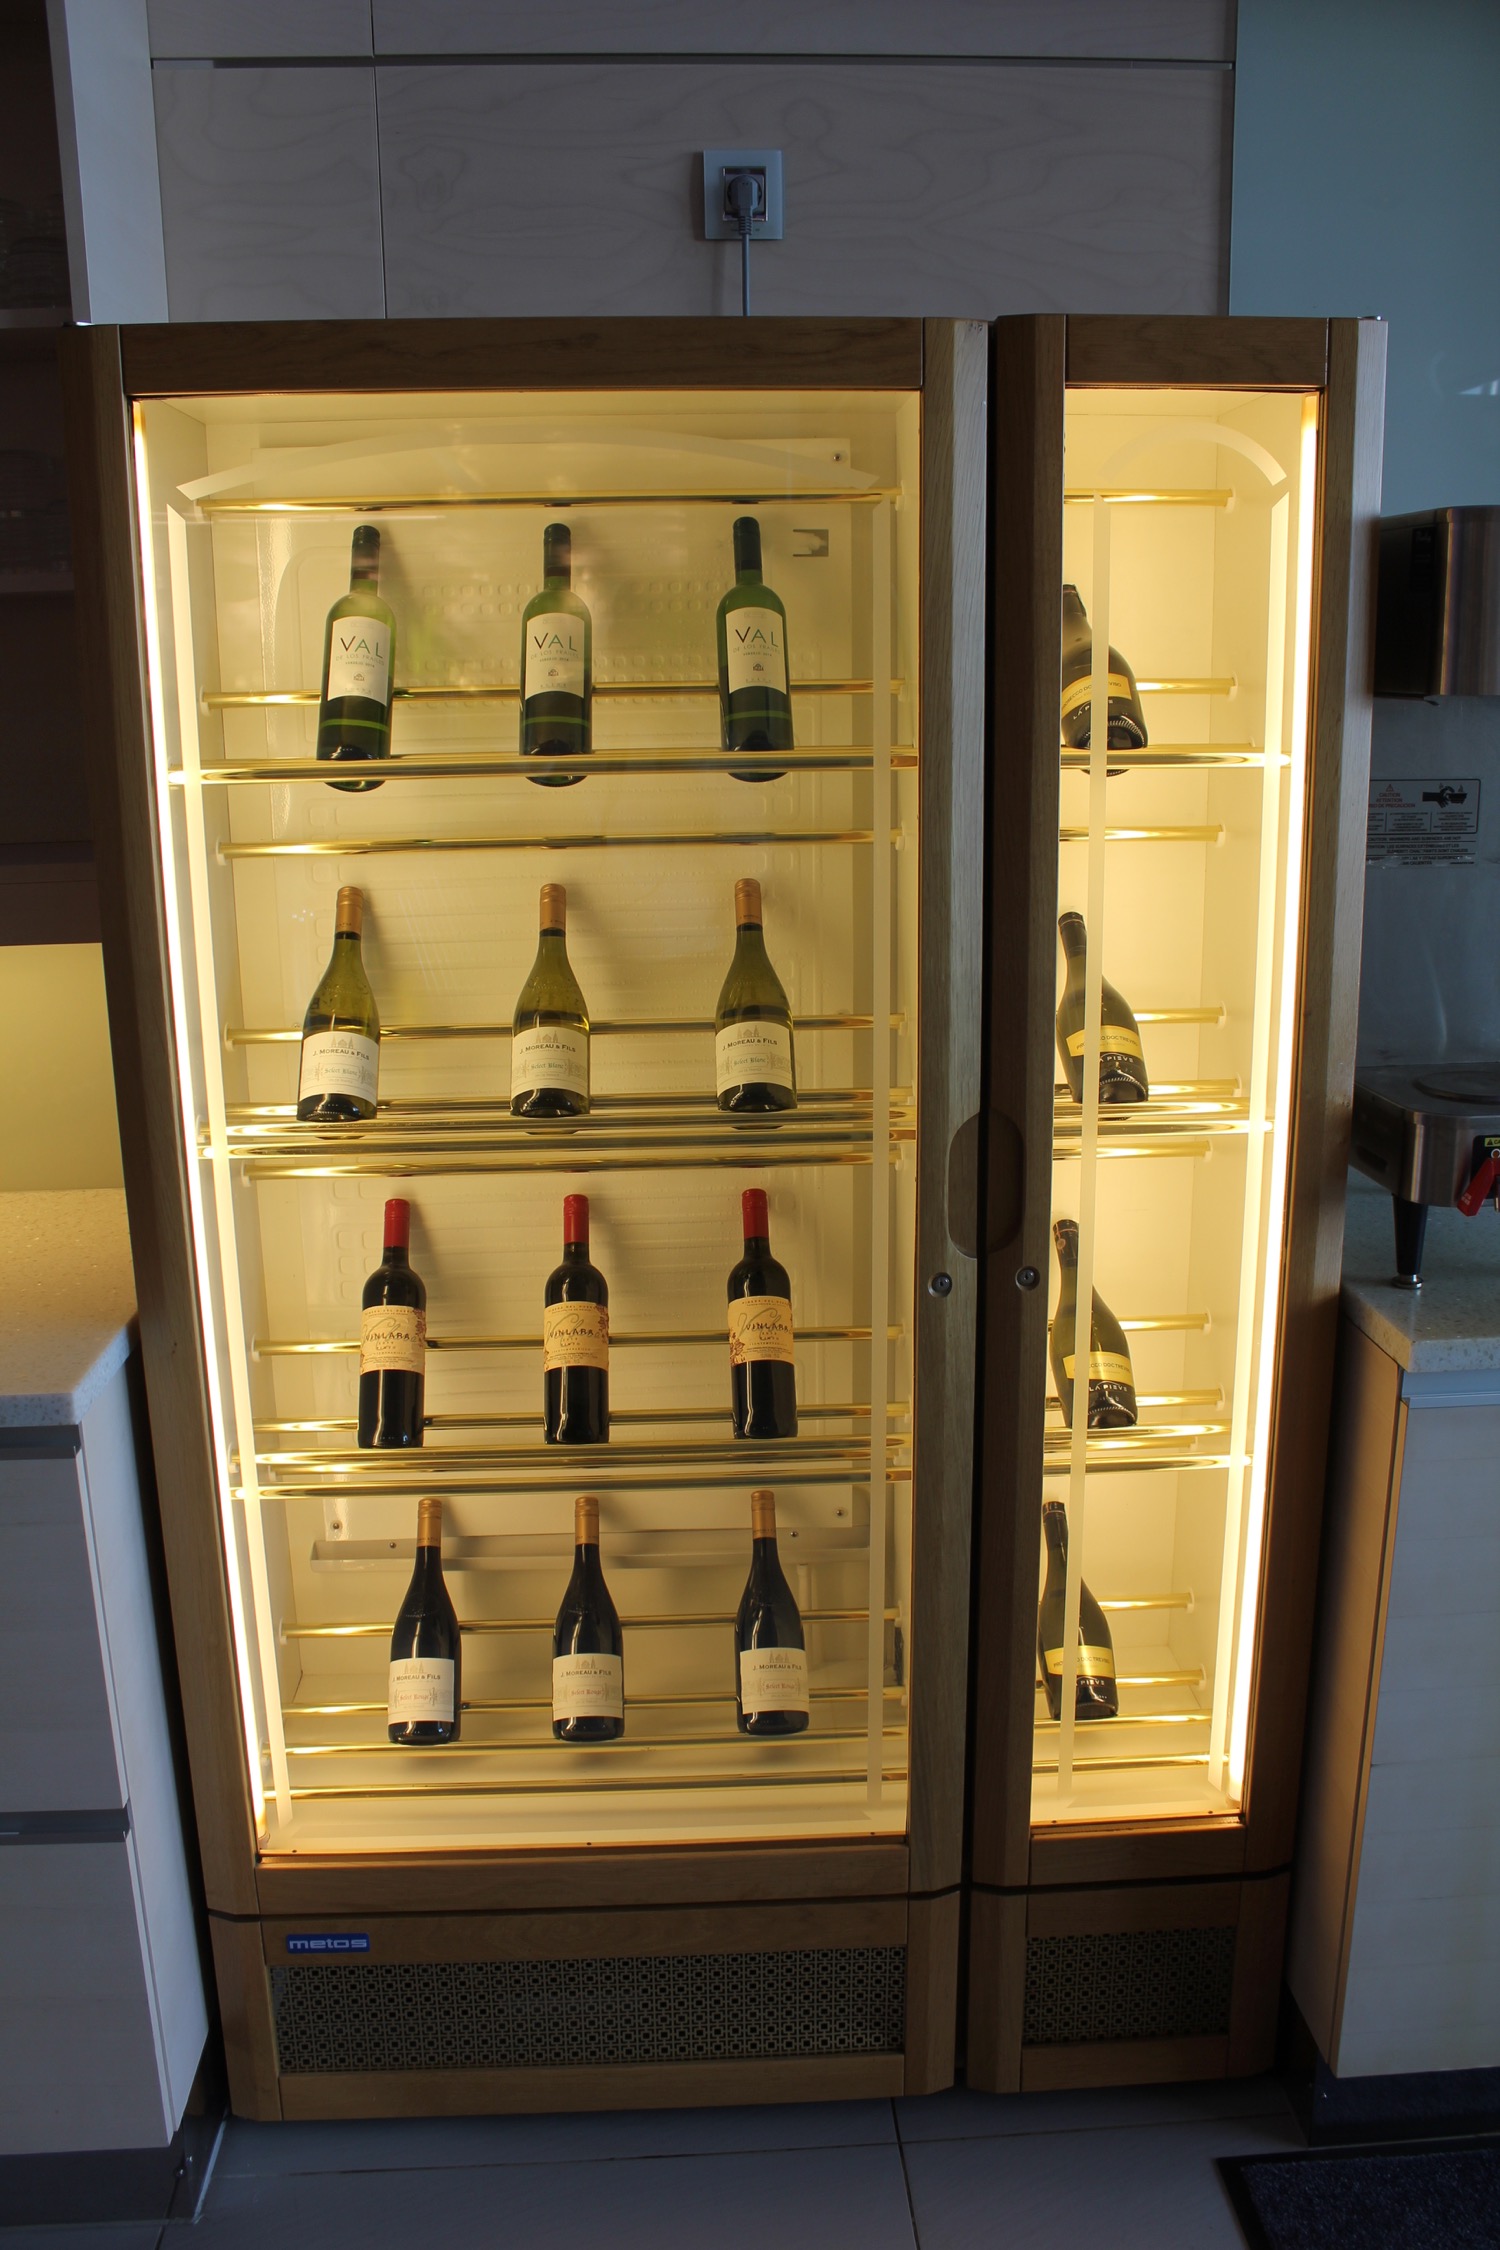 a display of wine bottles